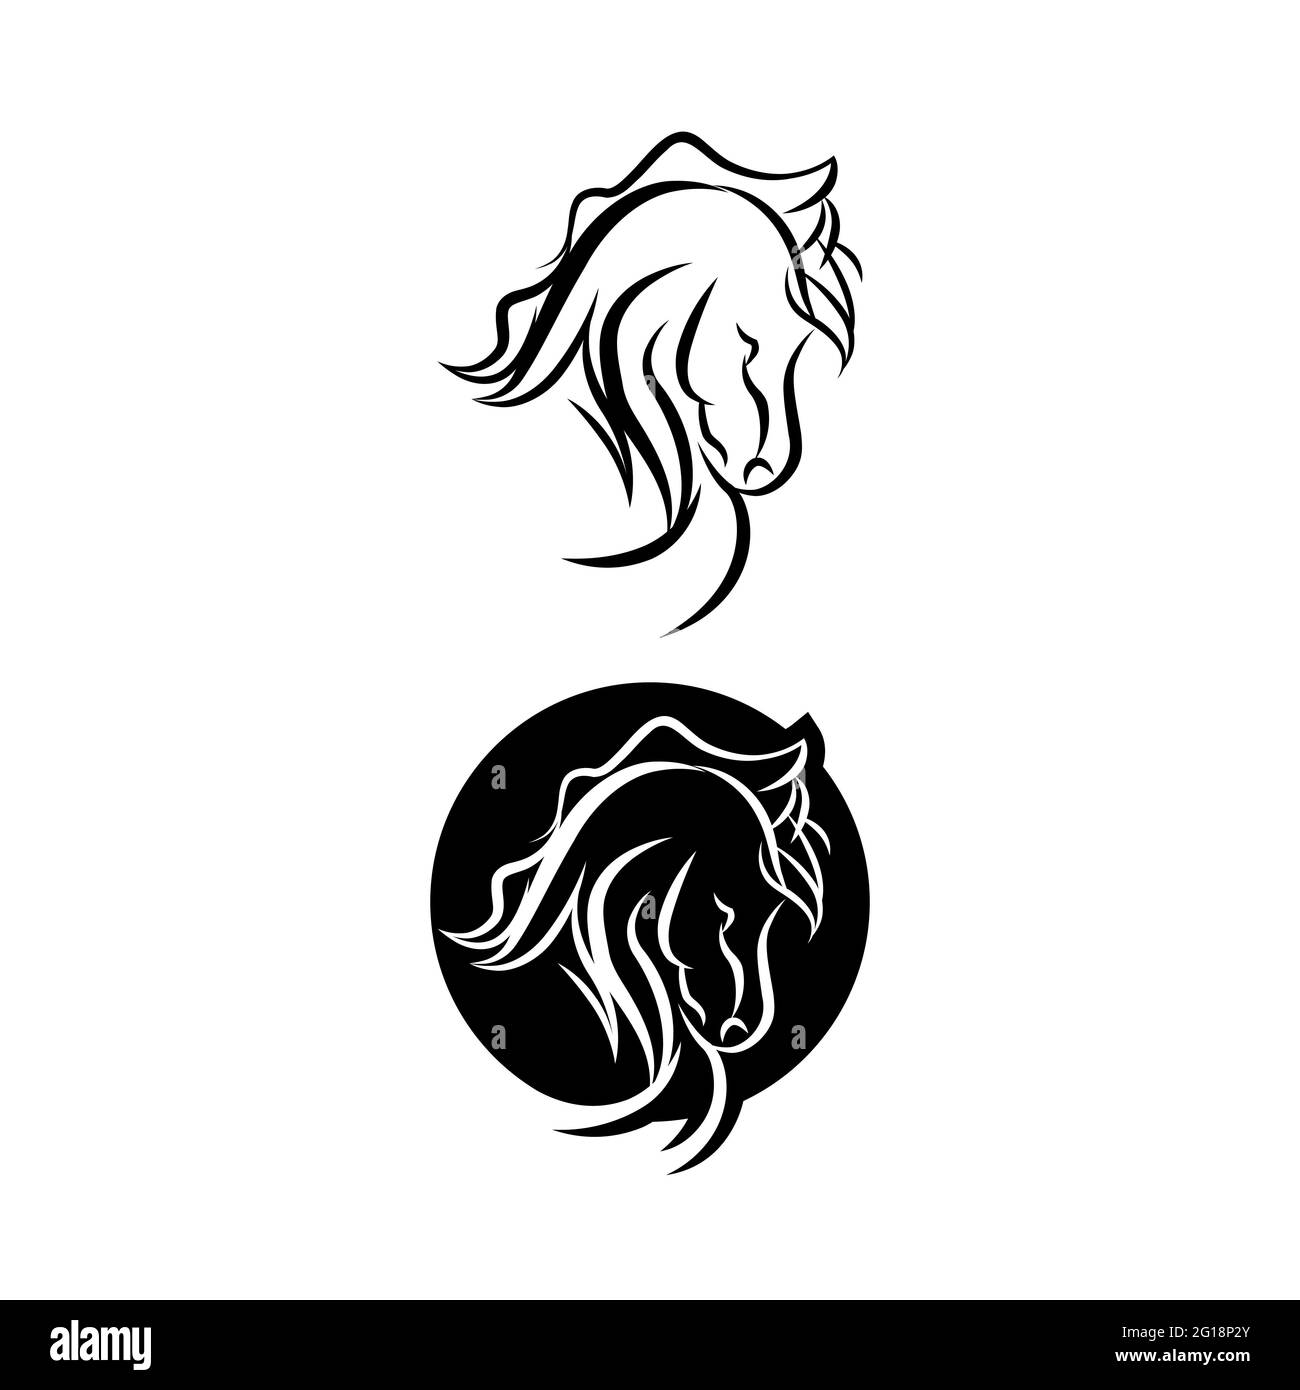 Black head horse icon vector isolated on white background. Black head horse icon vector illustration, editable stroke and EPS10. Black head horse icon Stock Vector